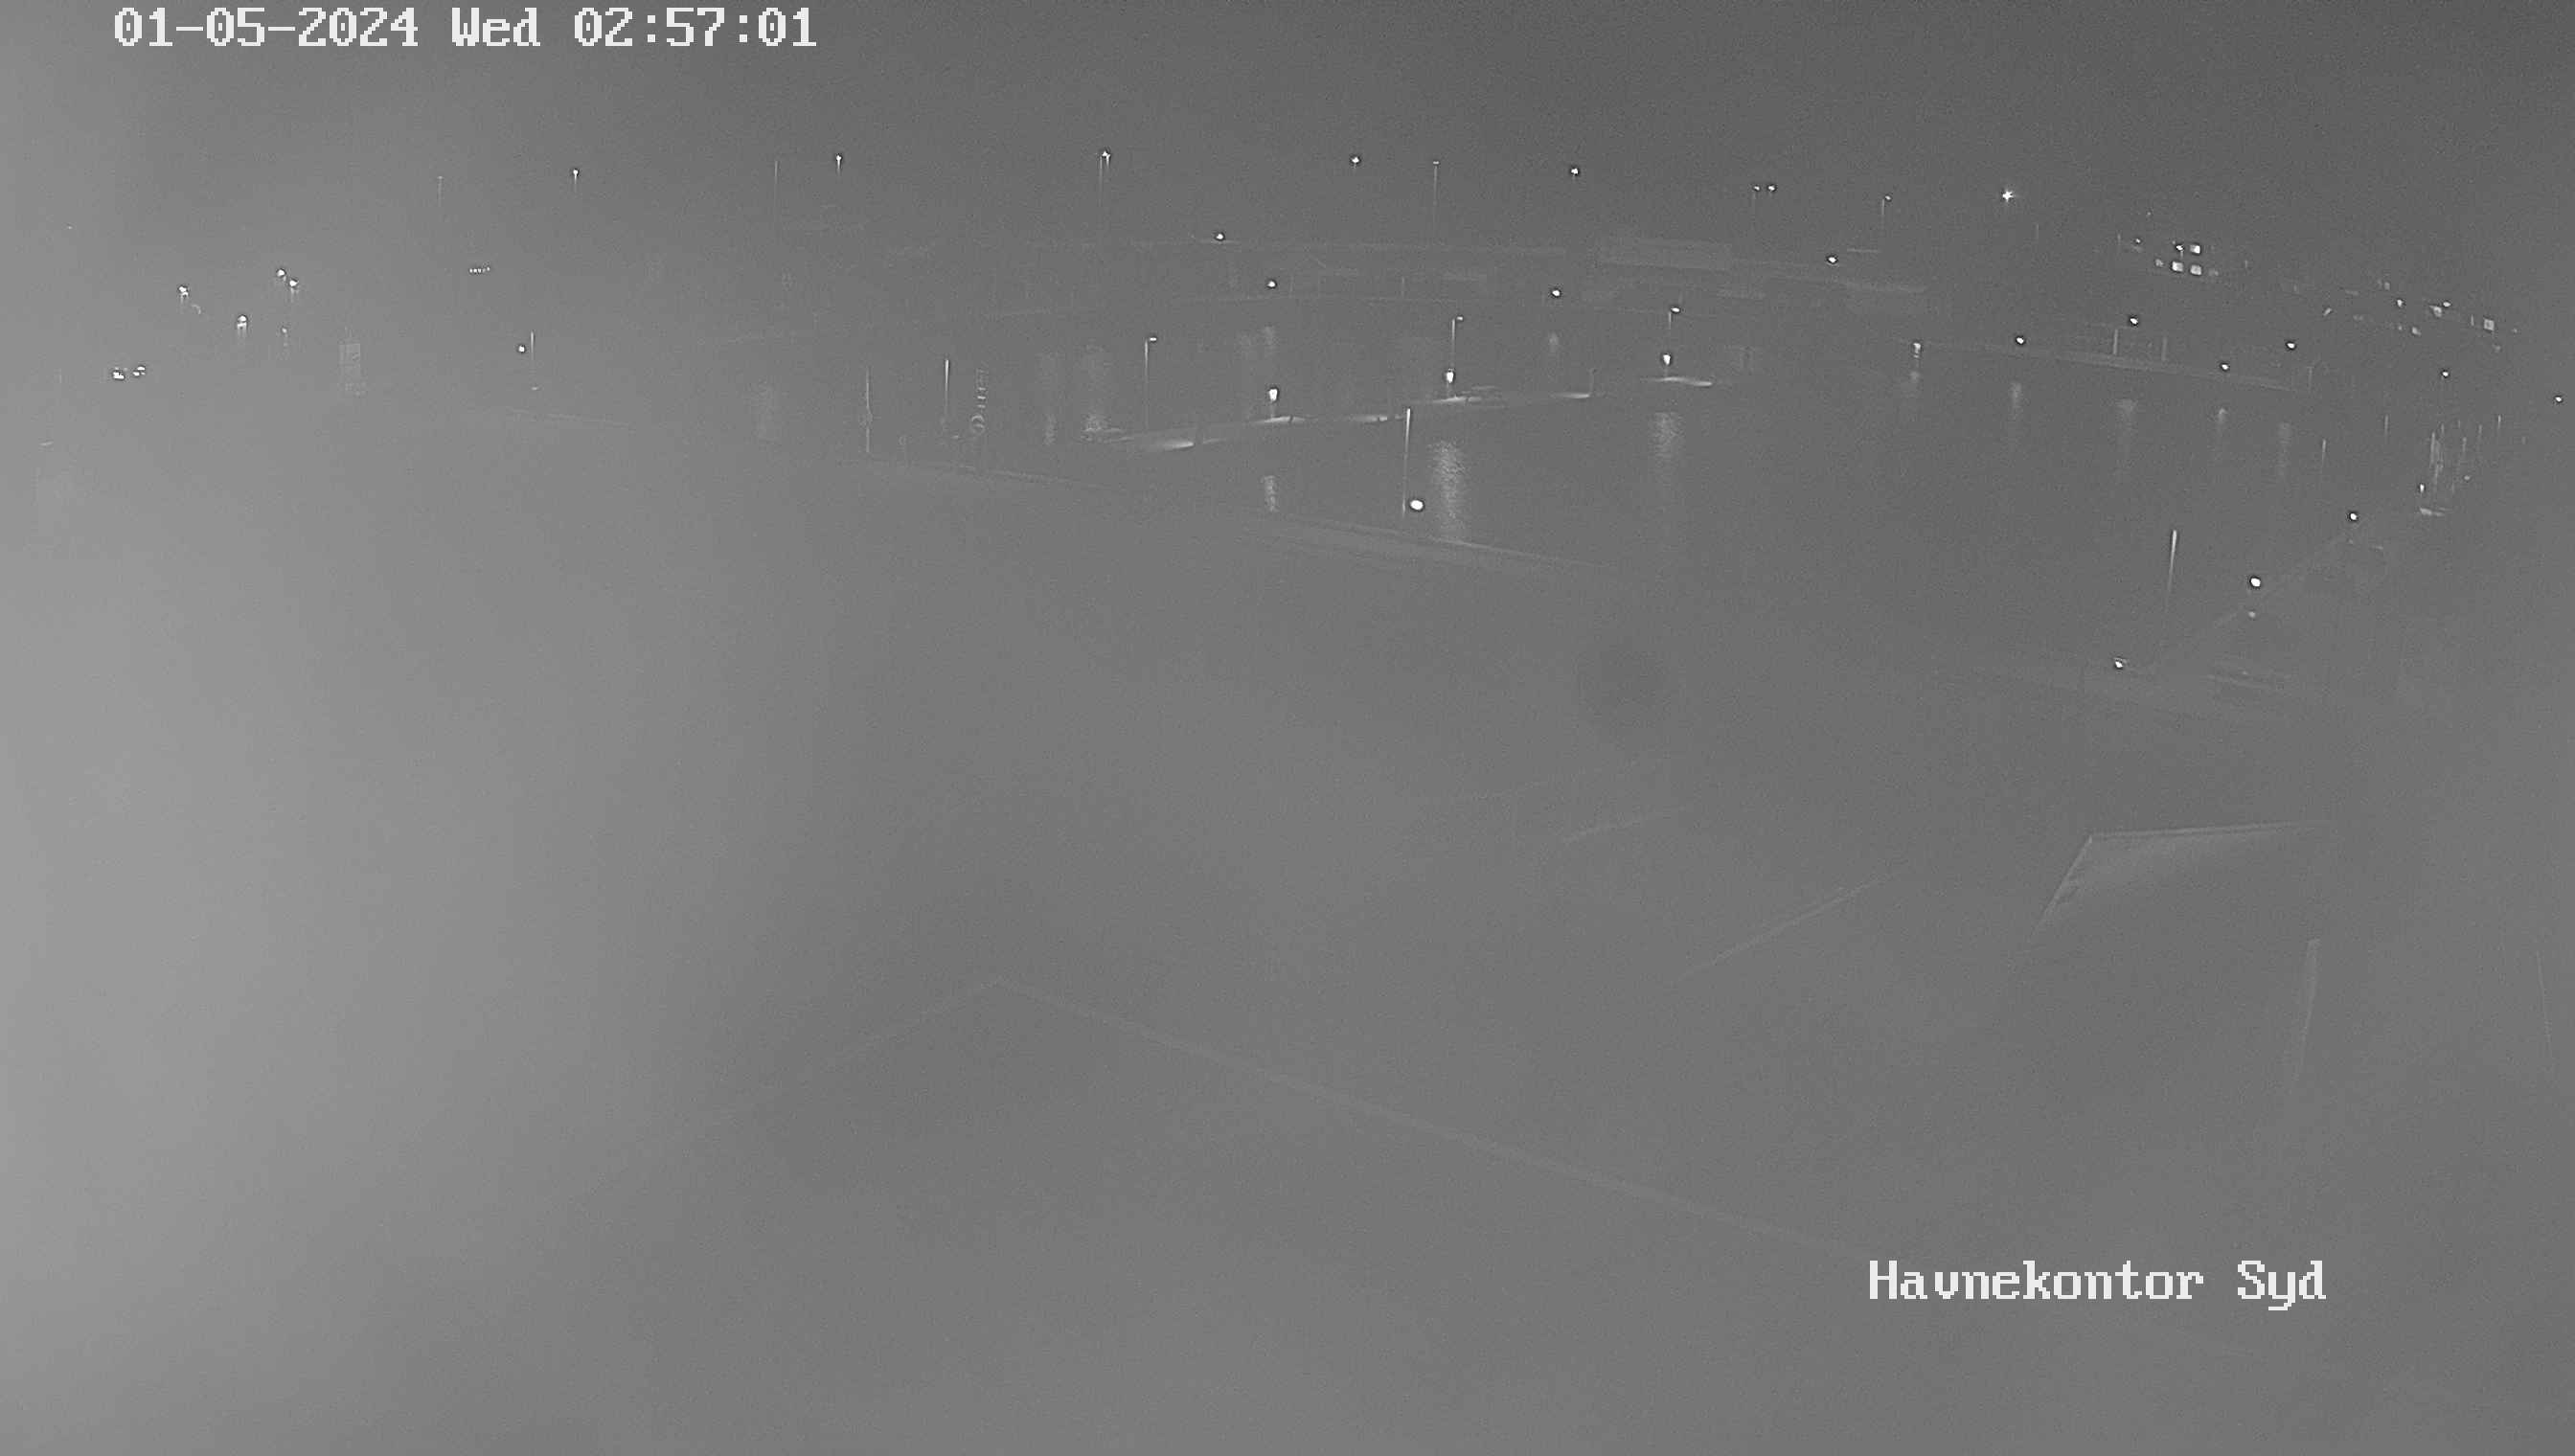 Vesterø Havn (Læsø) Mon. 02:58